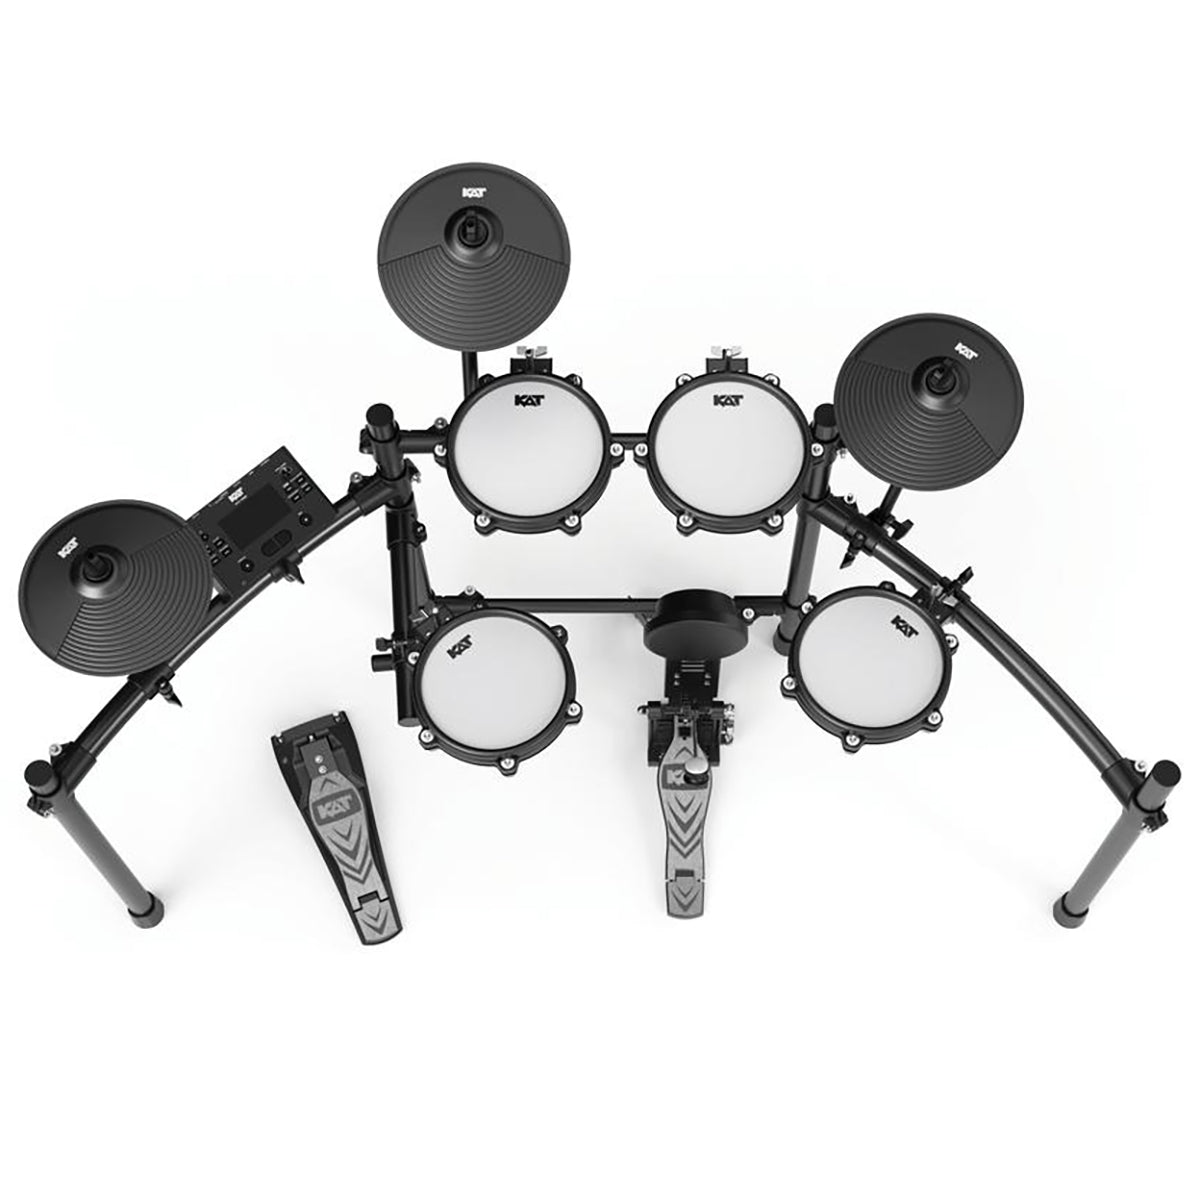 Kat Percussion KT-150 Electronic Drum Set - View 5